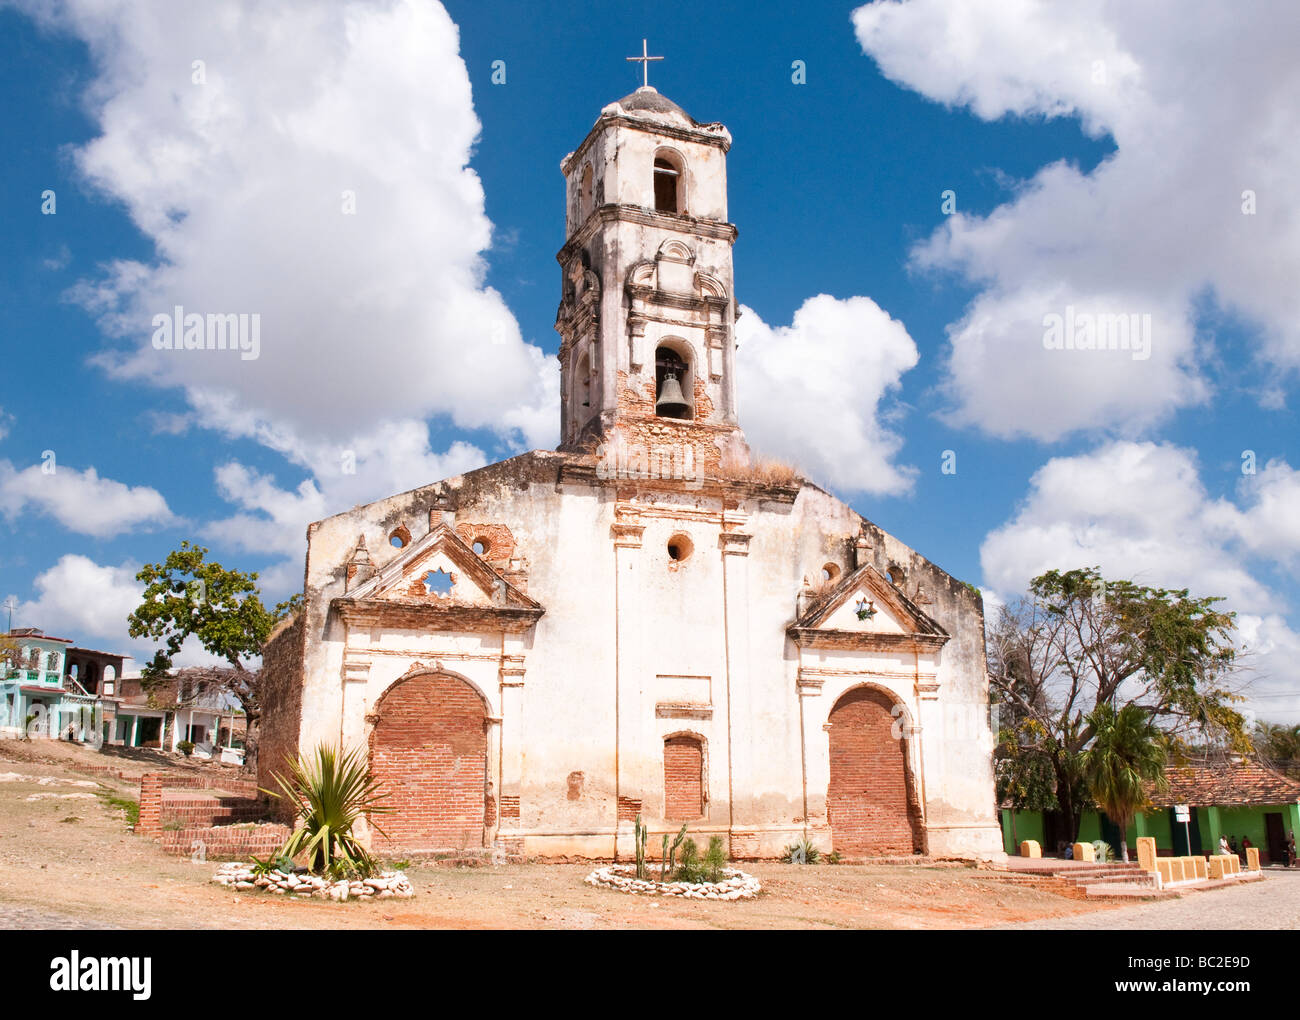 Ruins of Santa Ana church in Trinidad, Cuba, Caribbean Stock Photo